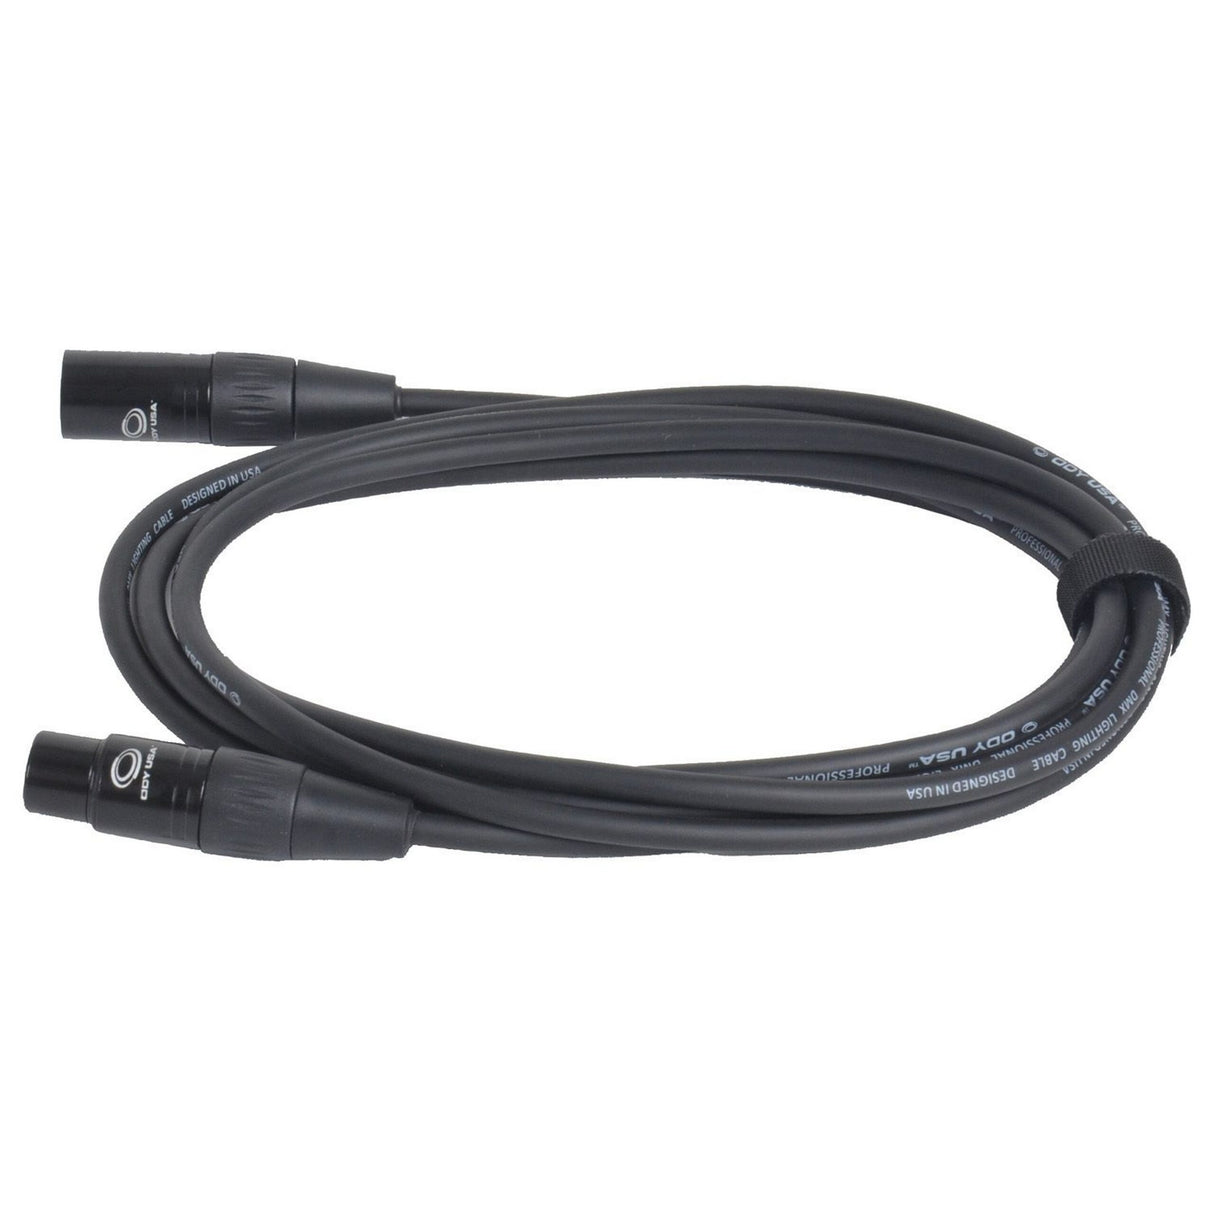 Odyssey OSP125DMX3 DMX XLR Male to XLR Female Cable, 3P Pro, 20-Feet